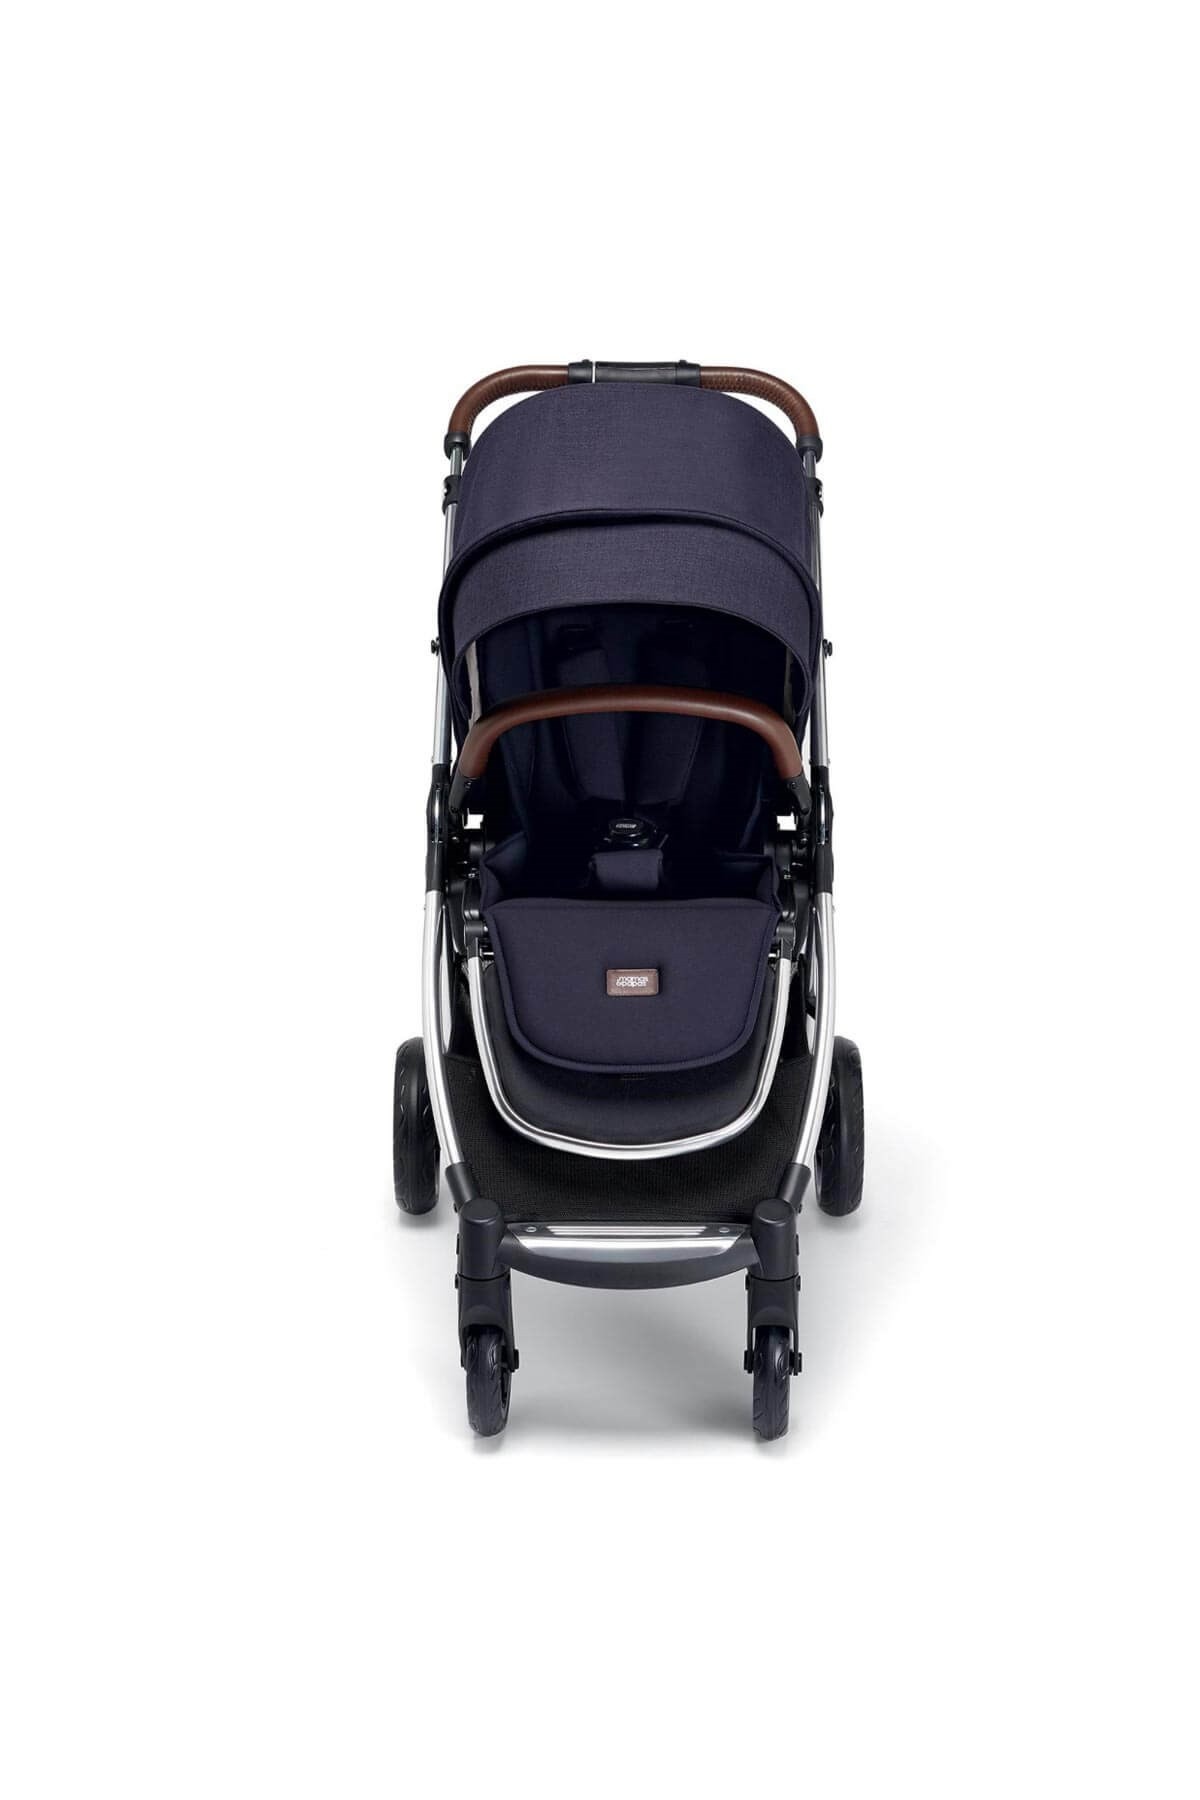 Mamas Papas Armadillo Flip XT3 Travel Sistem Bebek Arabası Dark Navy